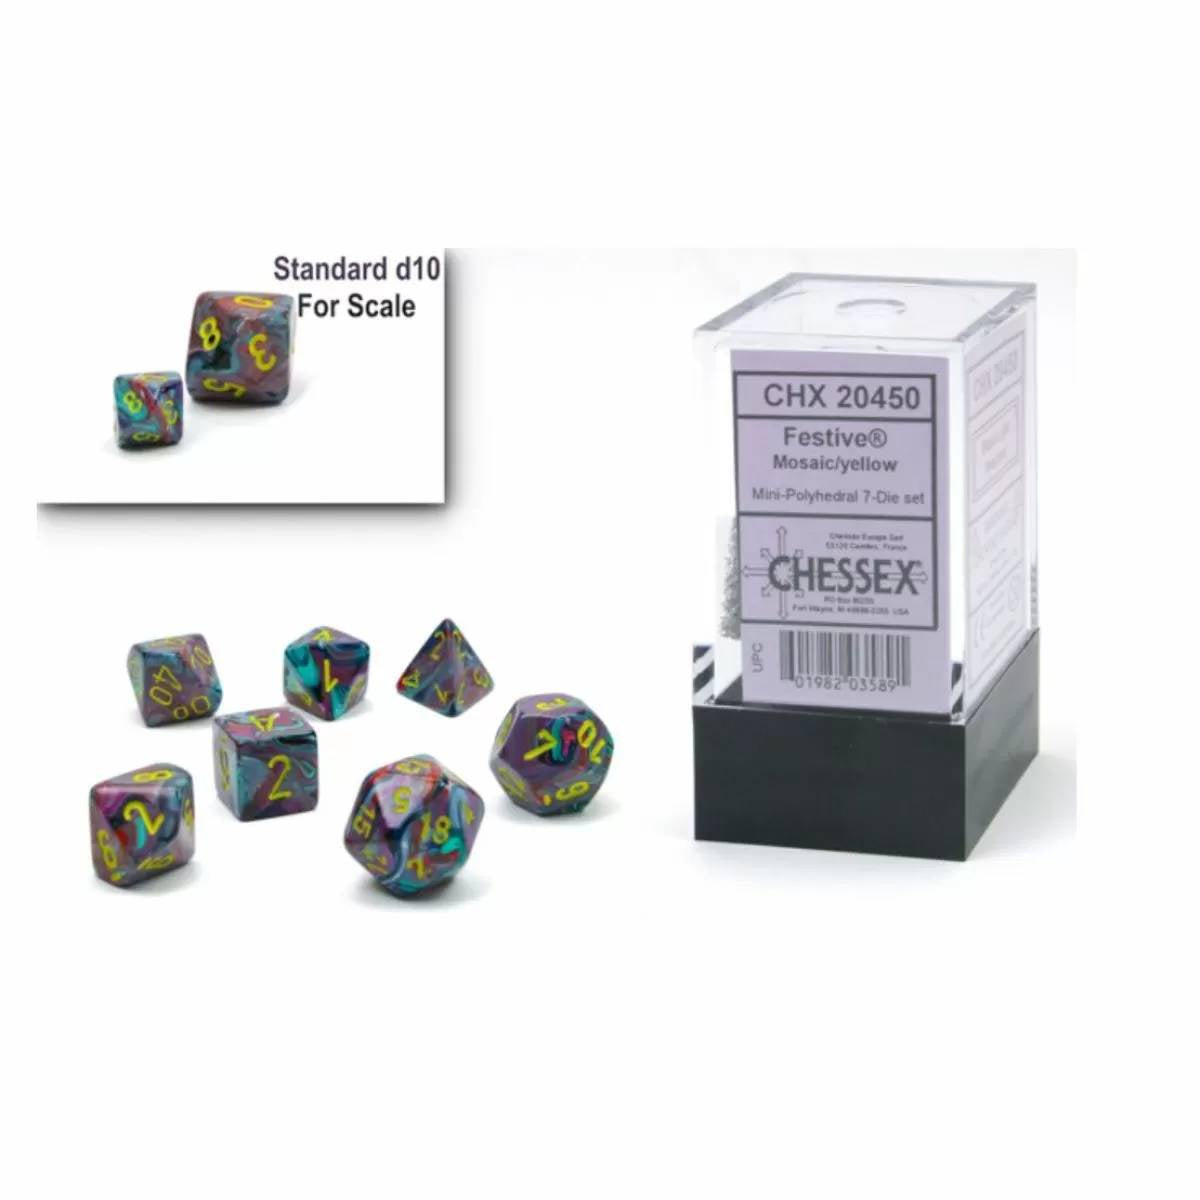 Chessex - Festive Mini Mosaic/Yellow 7-Die Set (CHX 20450)